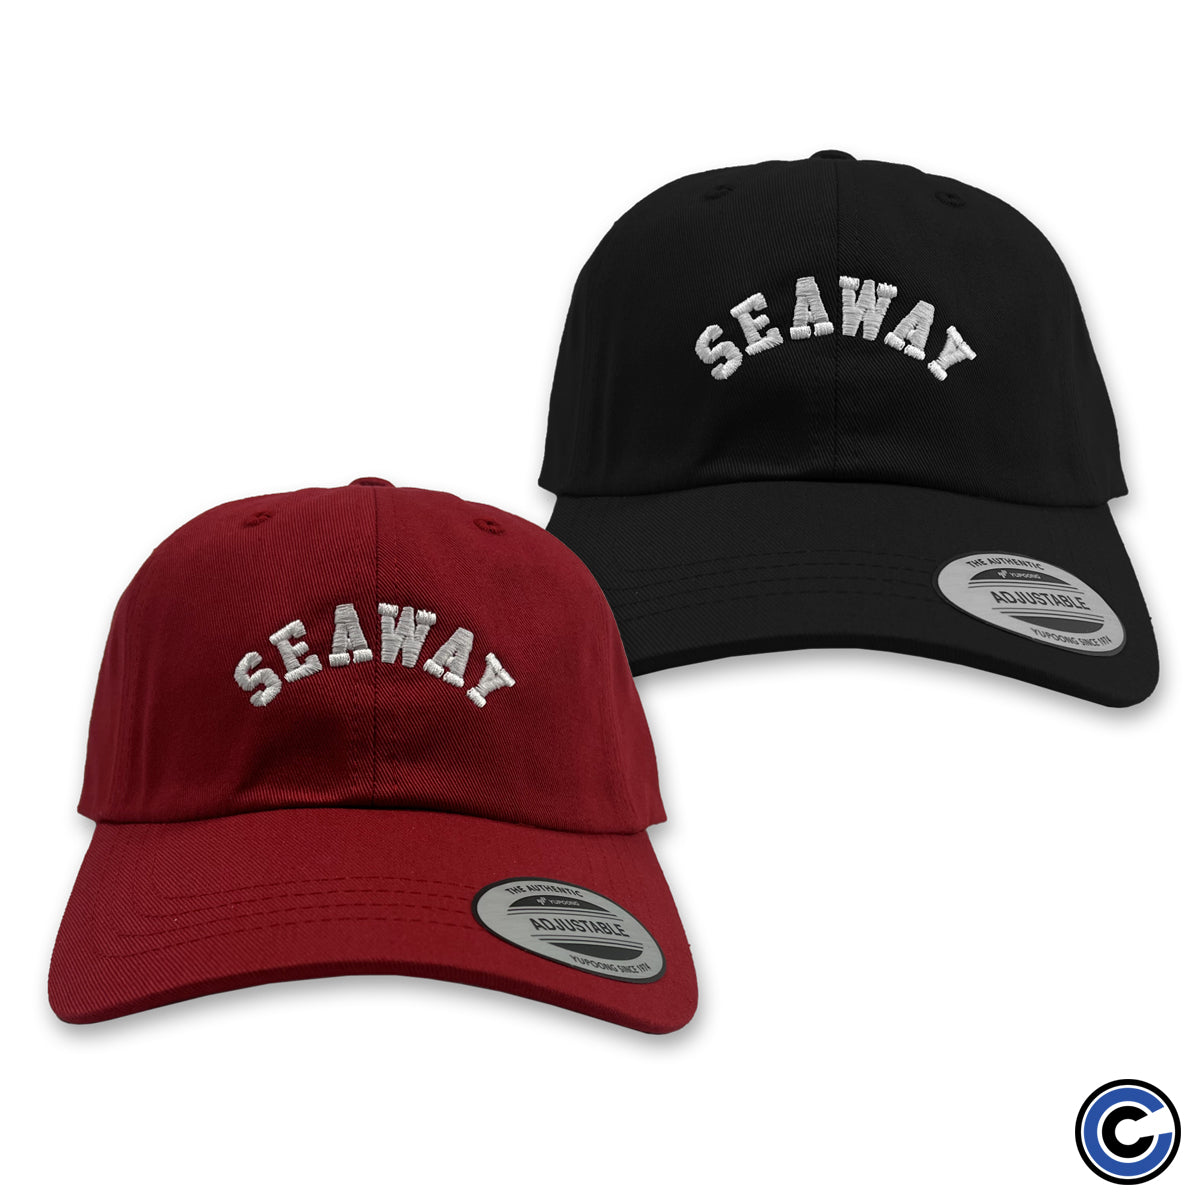 Seaway "Arch" Hat